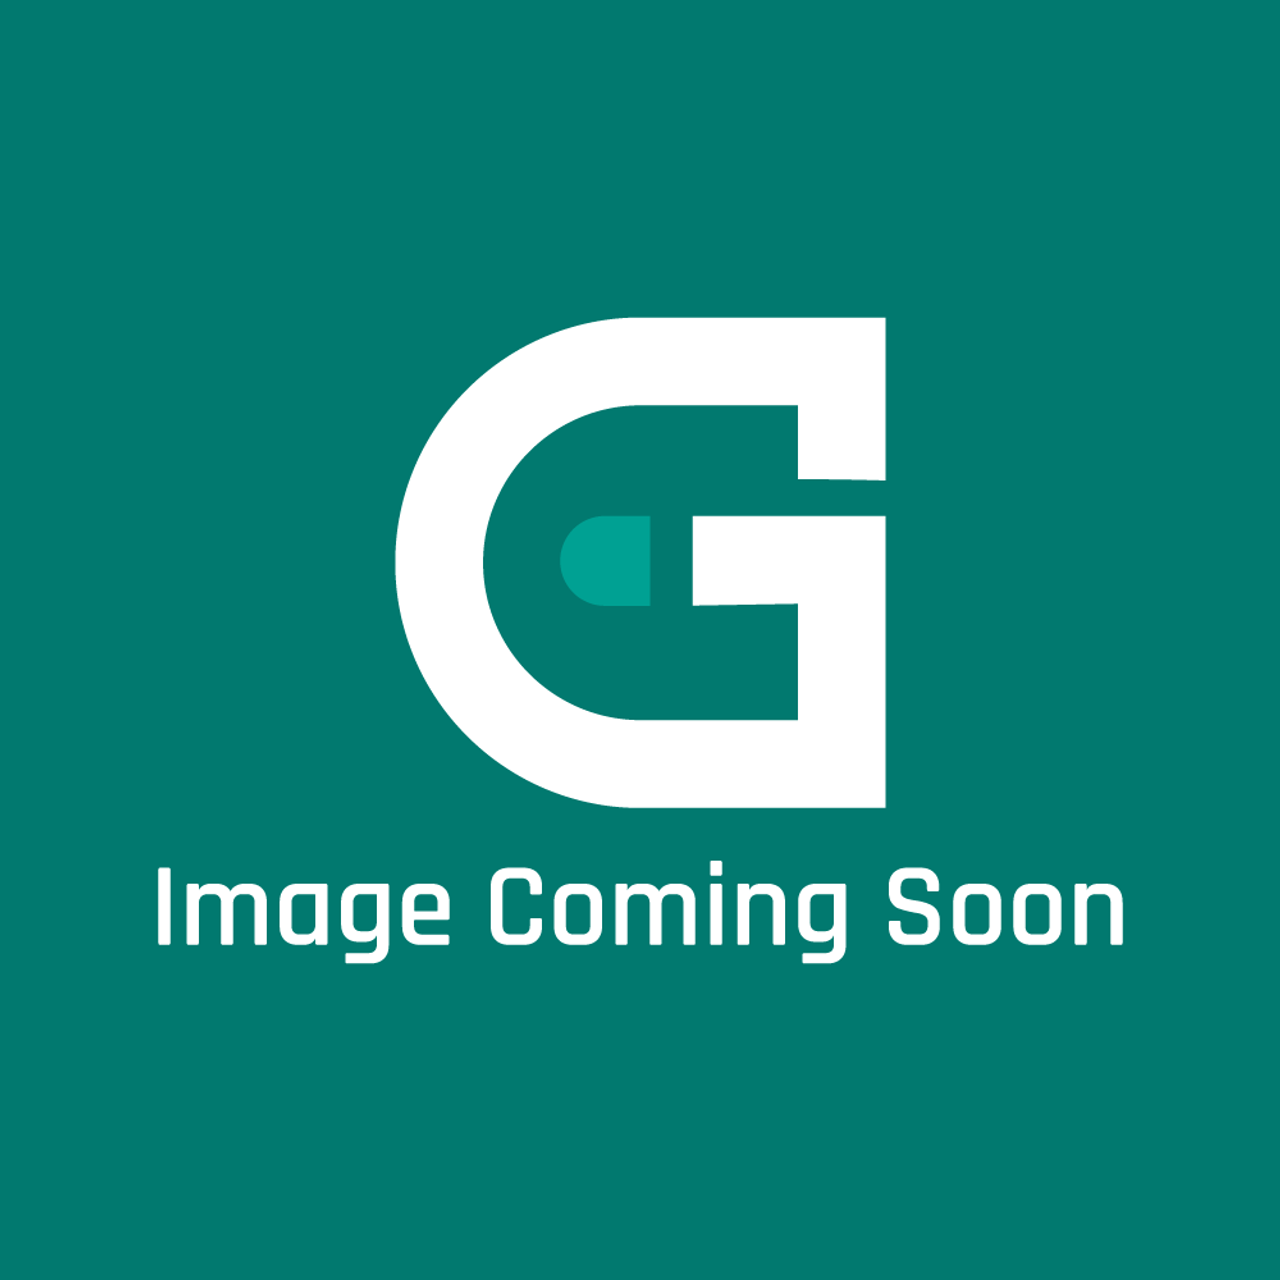 AGA Marvel RO4M998555 - Gasket:A/Conv (Emx)Bfg01005/3 - Image Coming Soon!